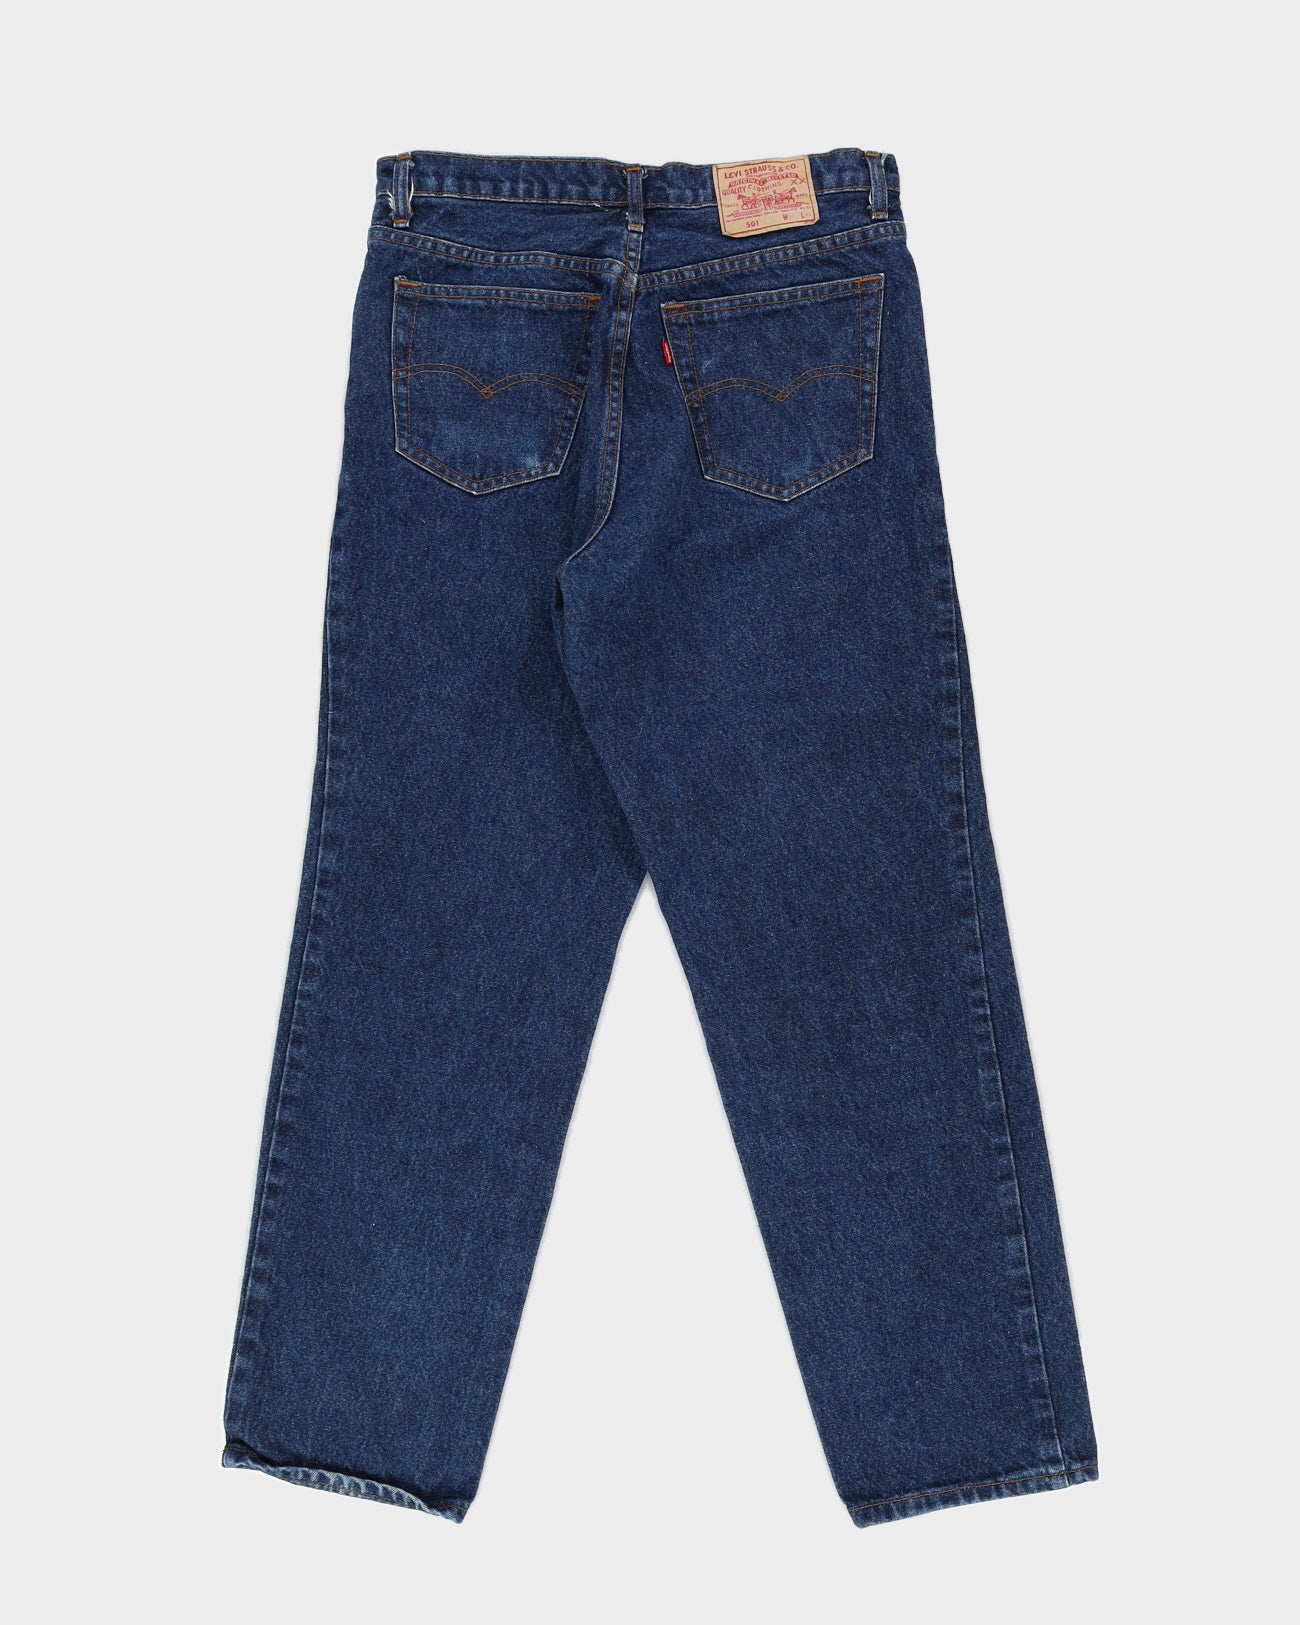 Vintage 90s Levi's Dark Wash 501 Jeans - W35 L31